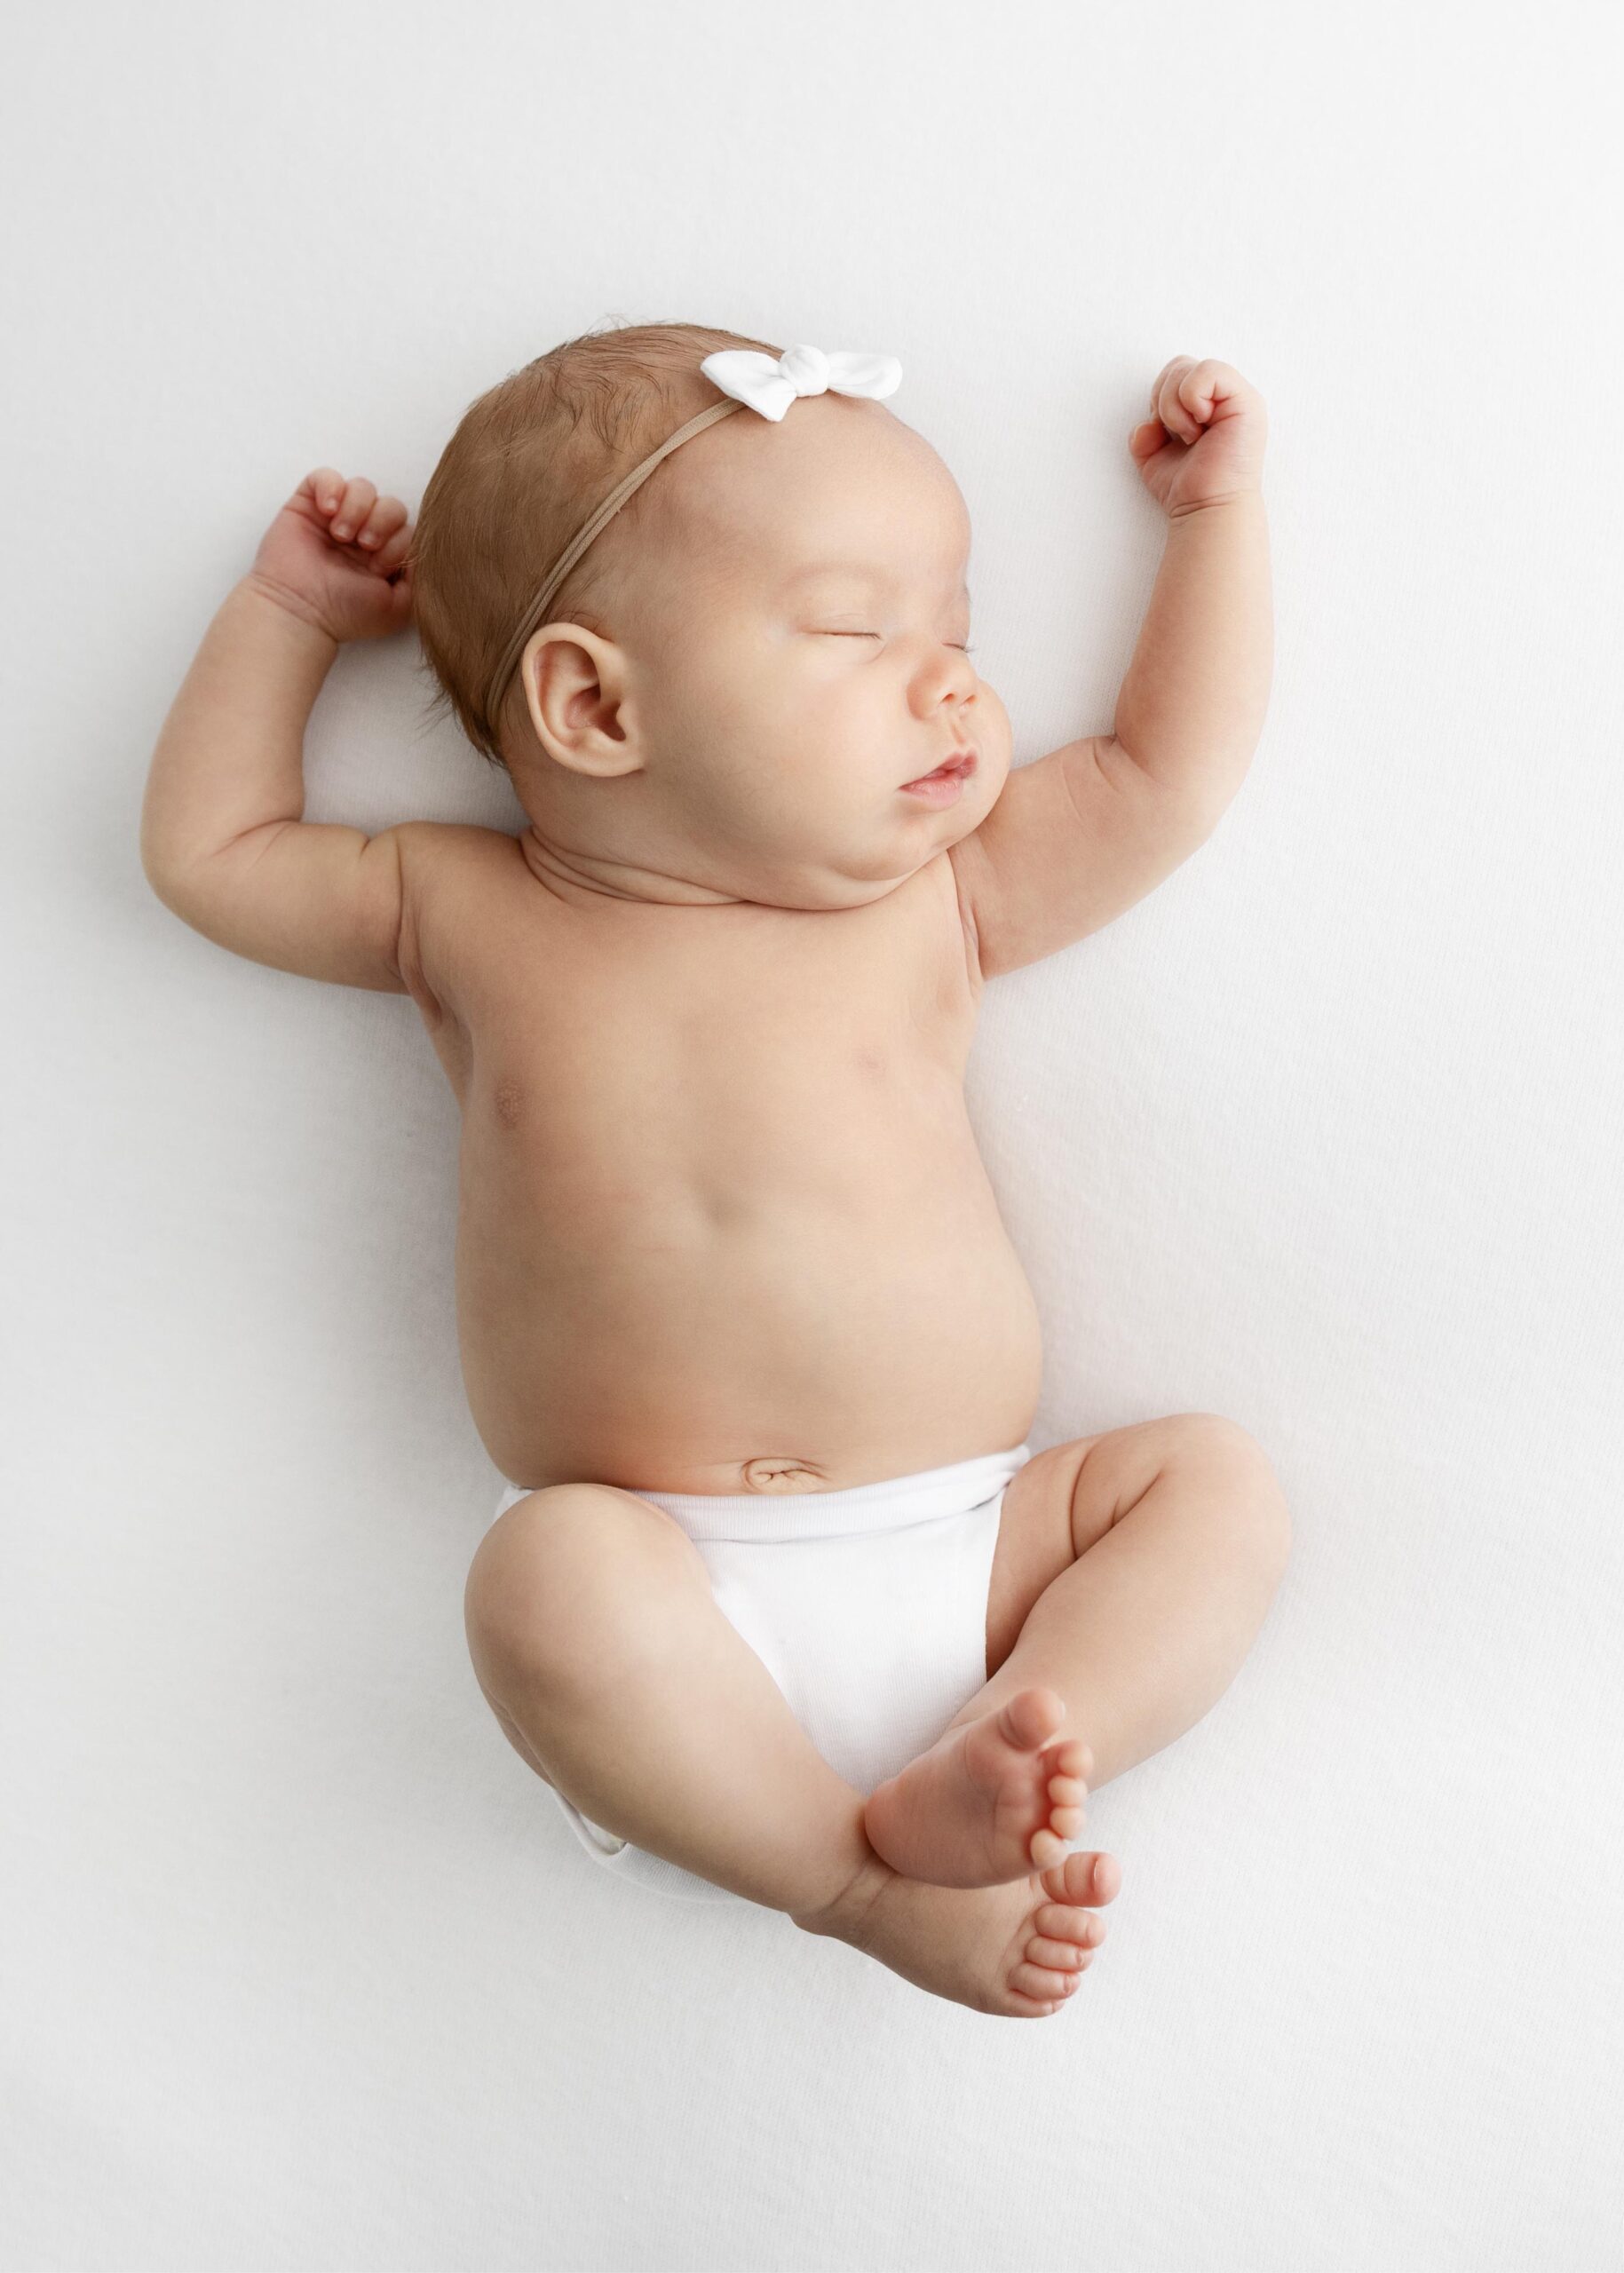 newborn girl in white diaper stretching while sleeping